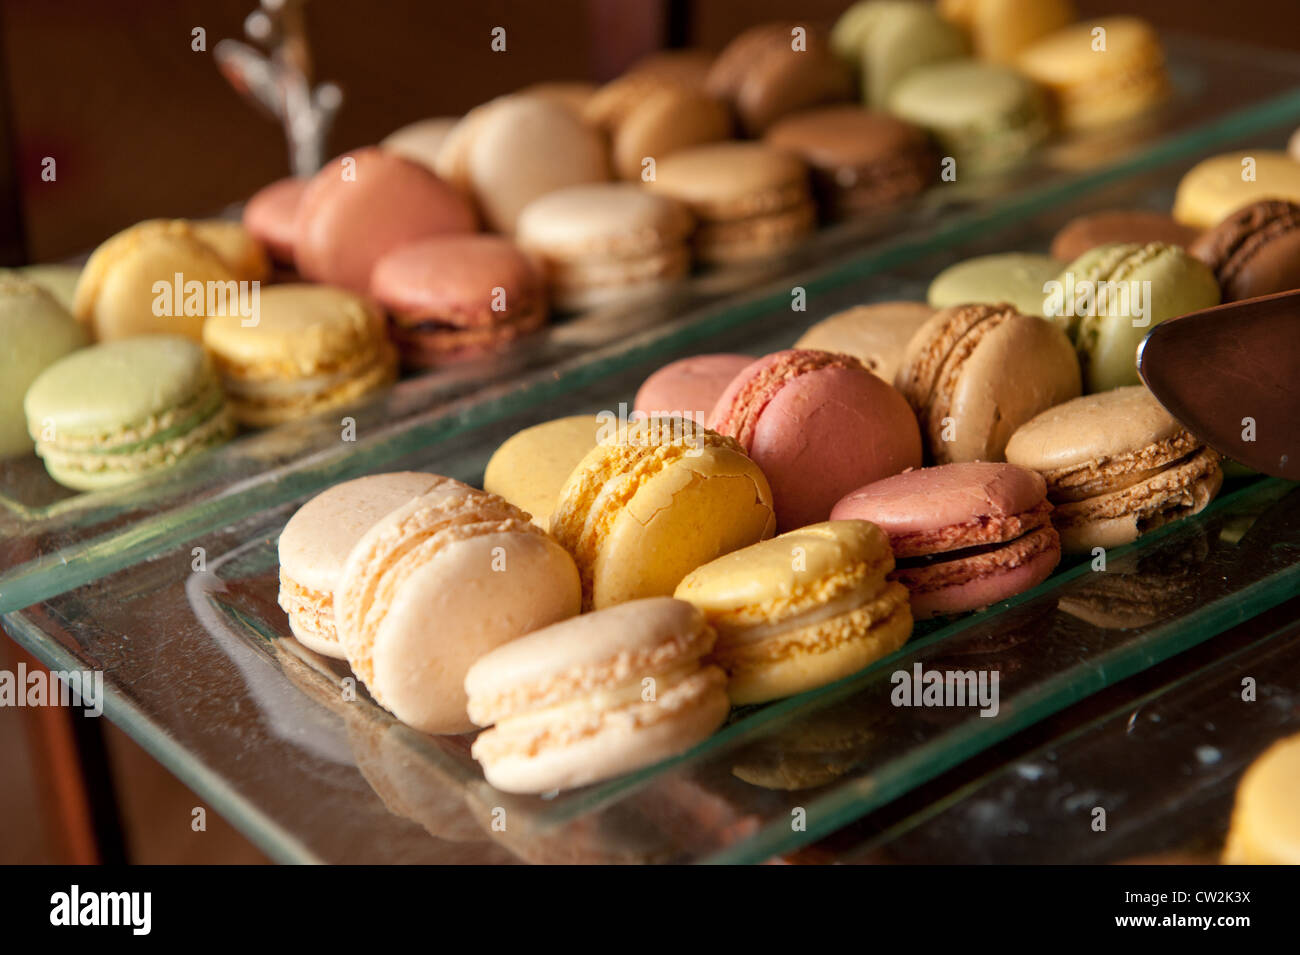 Flavors of macarons on display Stock Photo